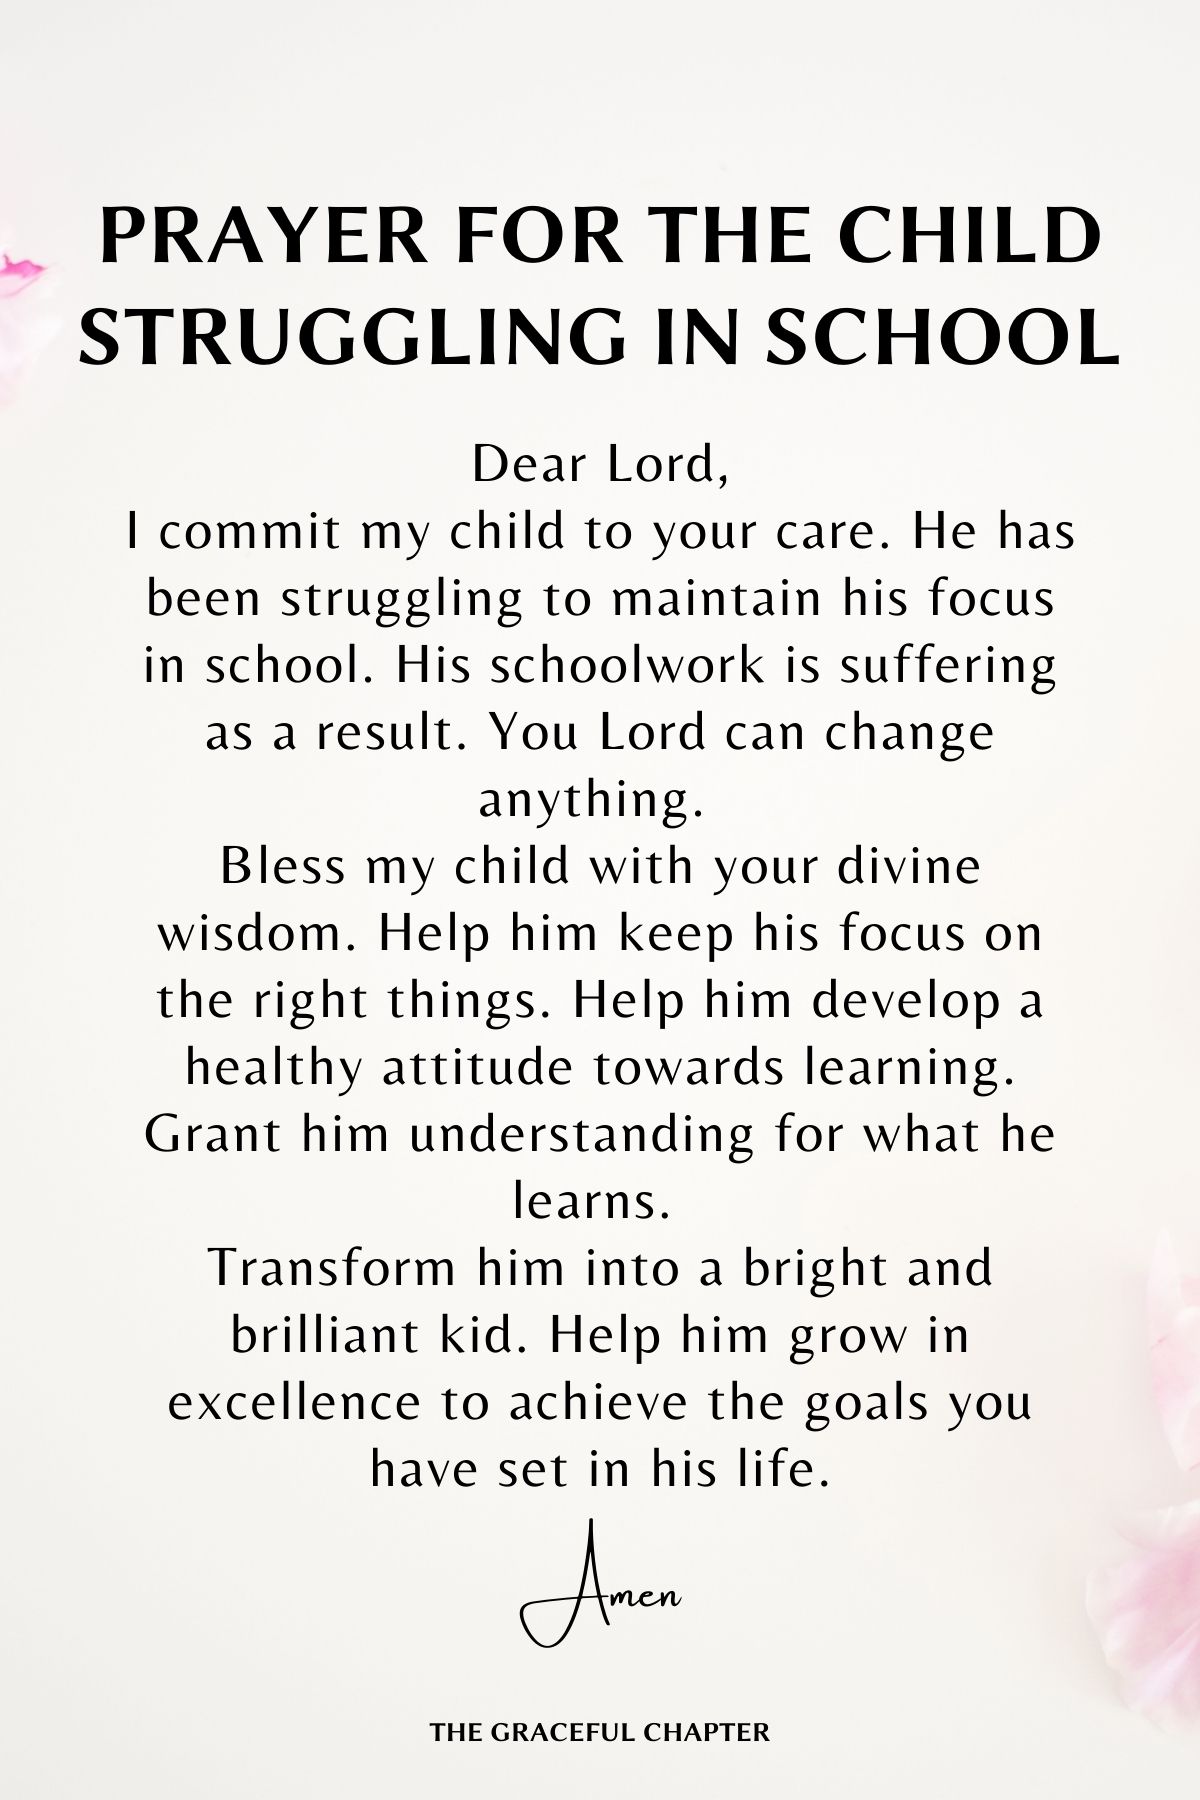 Prayer for the child struggling in school